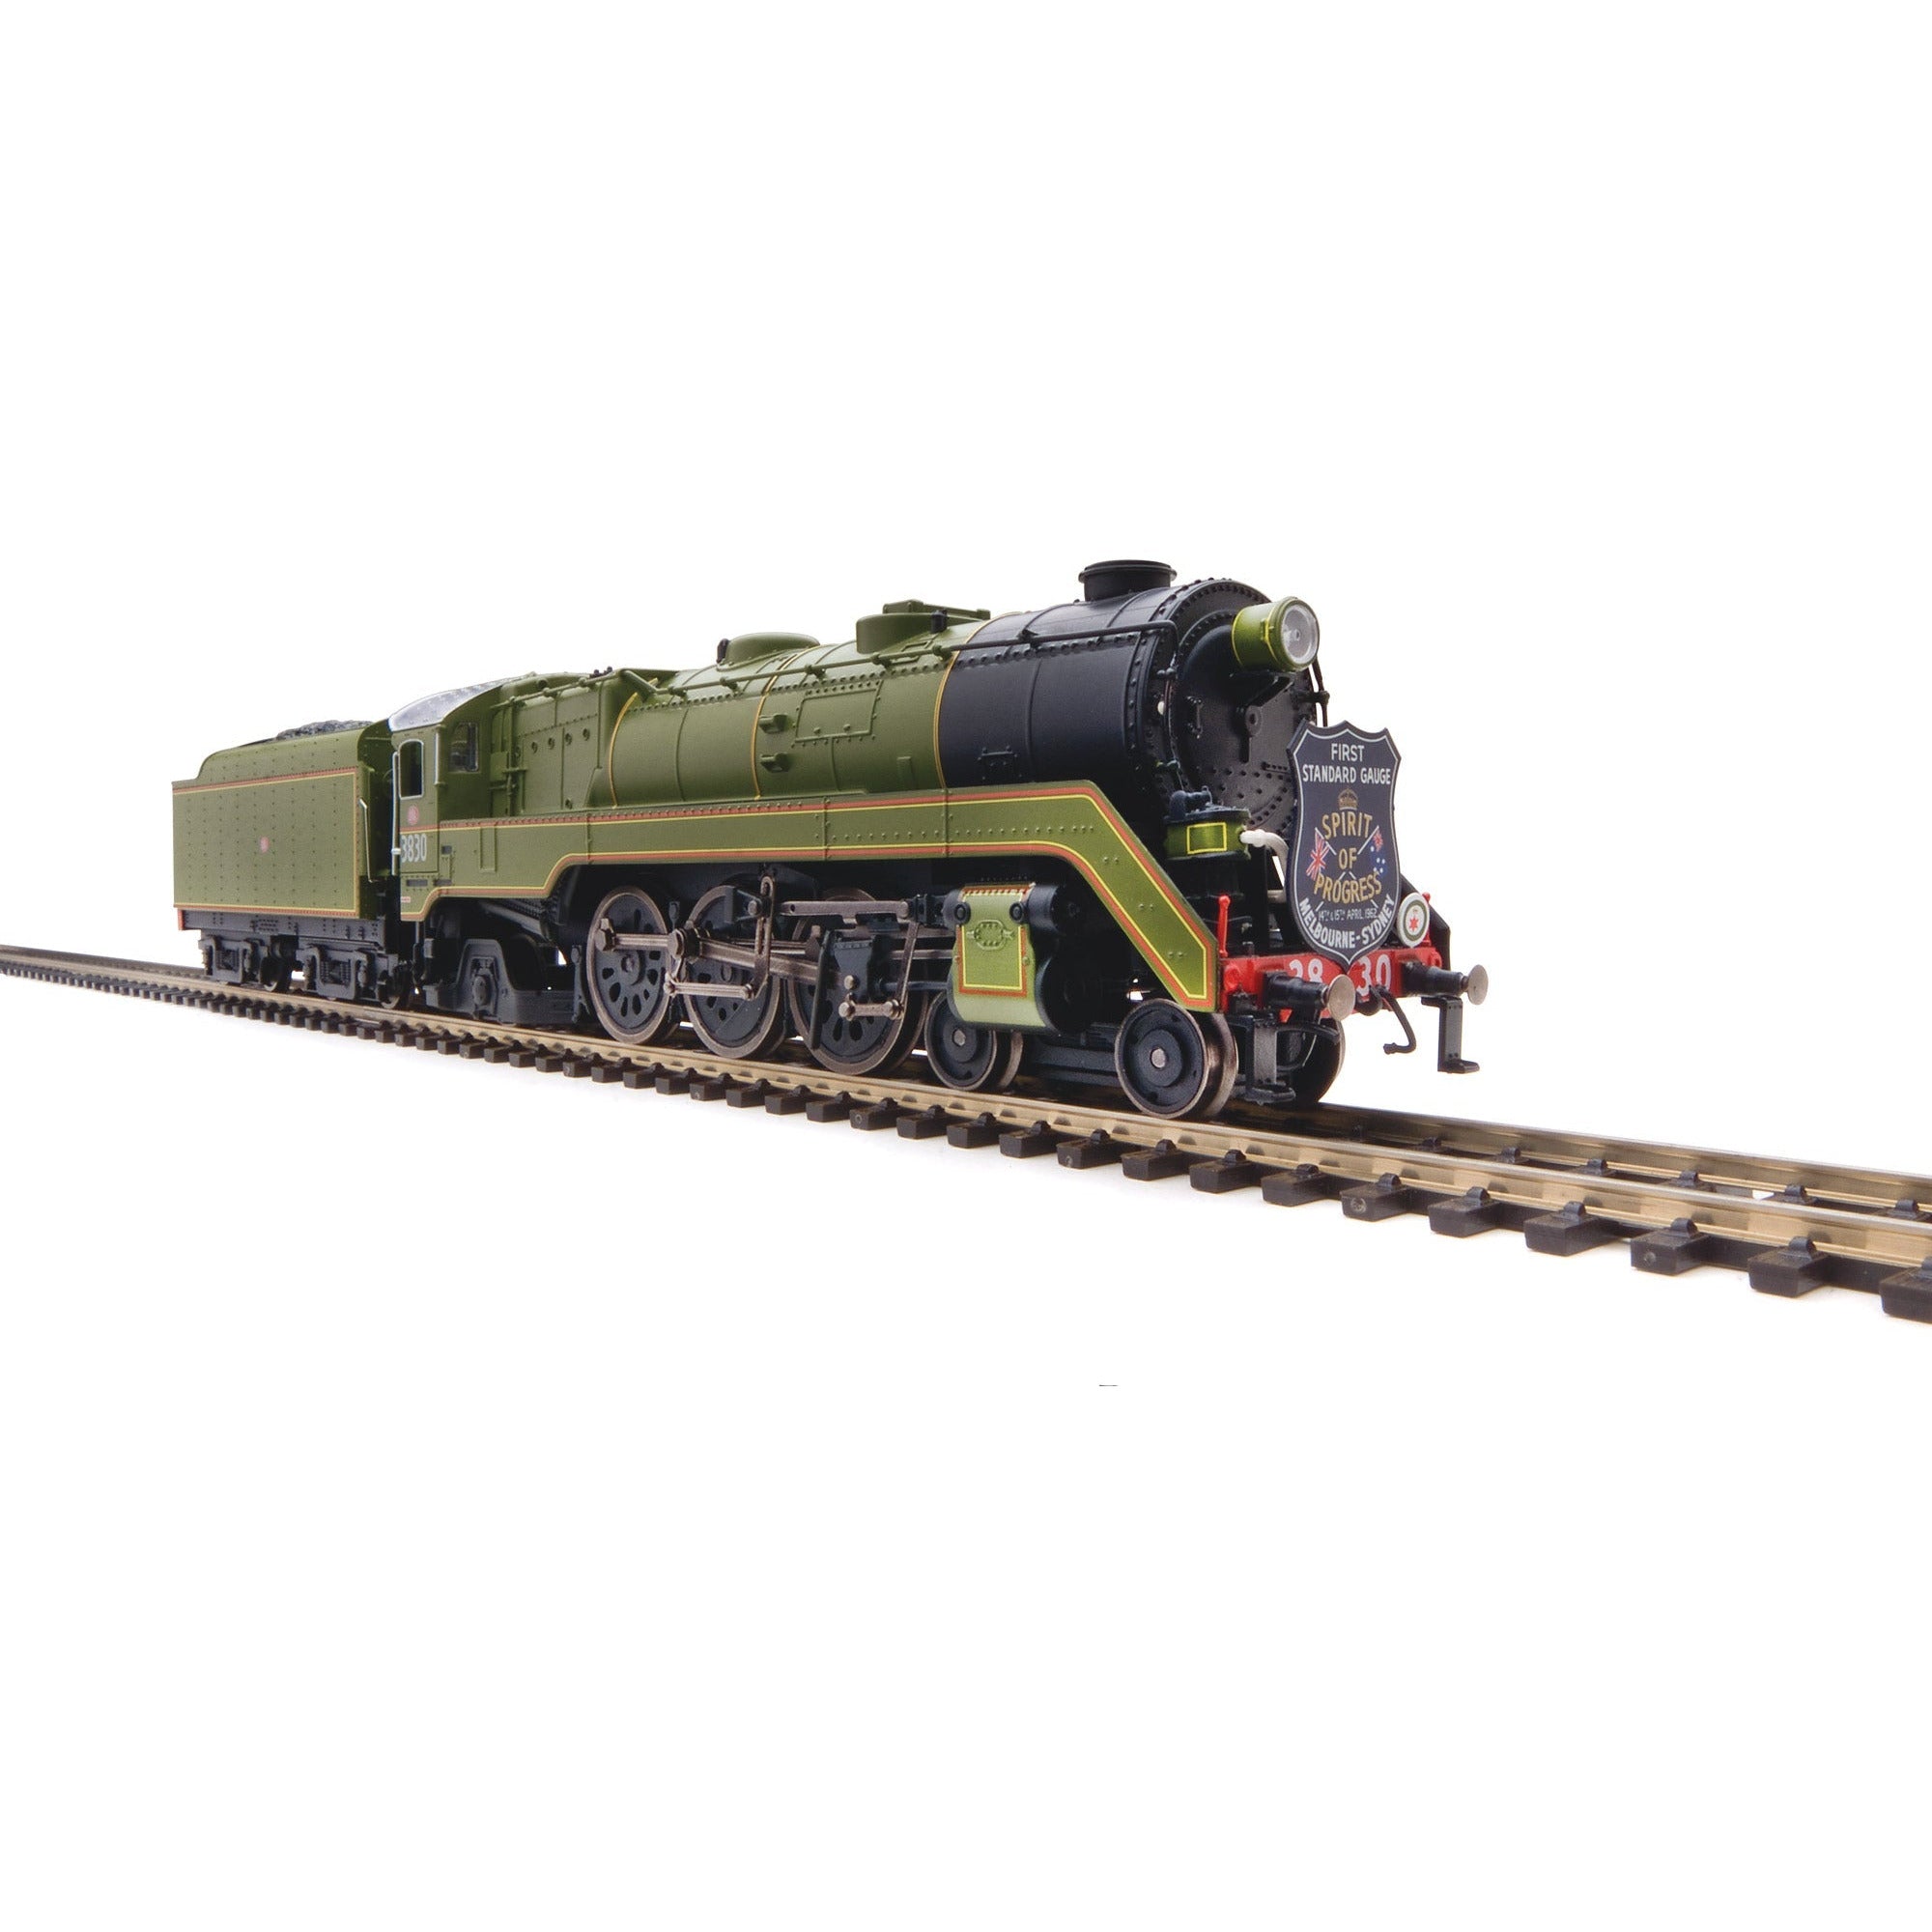 ARM HO C38 Class 4-6-2 Pacific Express Passenger Locomotive #3830 'Spirit of Progress' Olive Green with Black Smoke Box